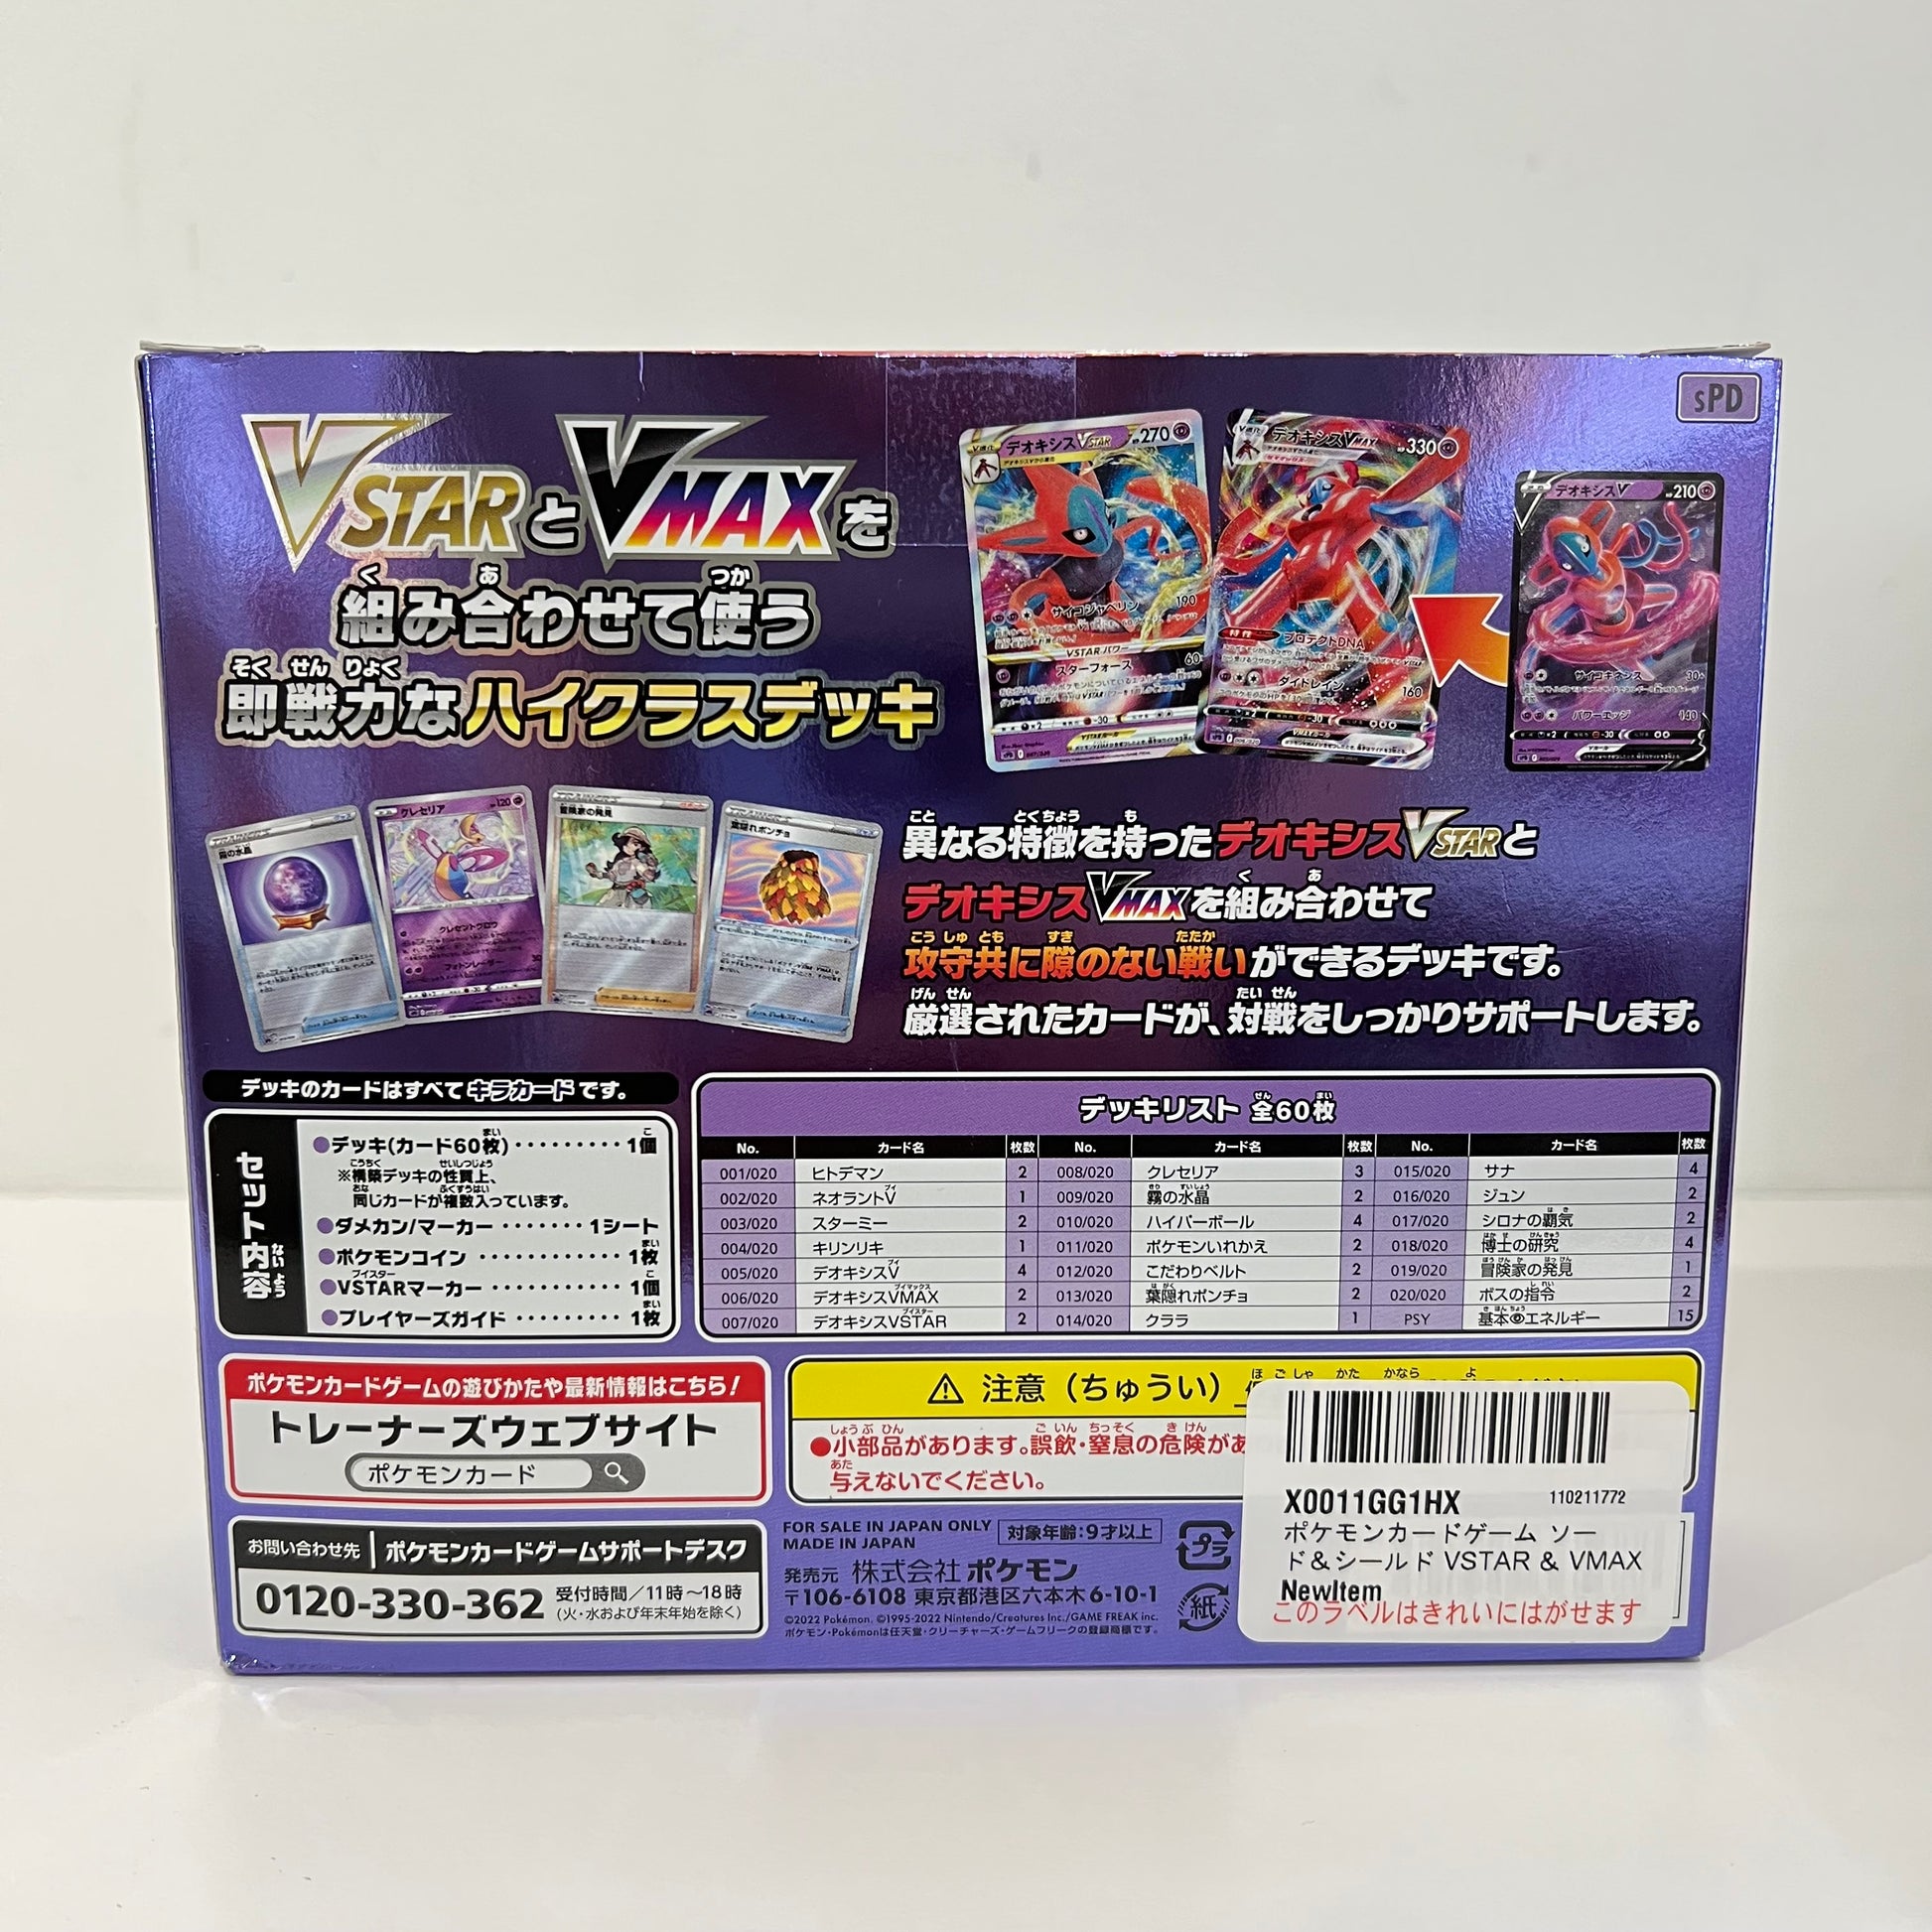 Deoxys VSTAR 007/020 SPD High Class Deck Deoxys - Pokemon Card Japanese